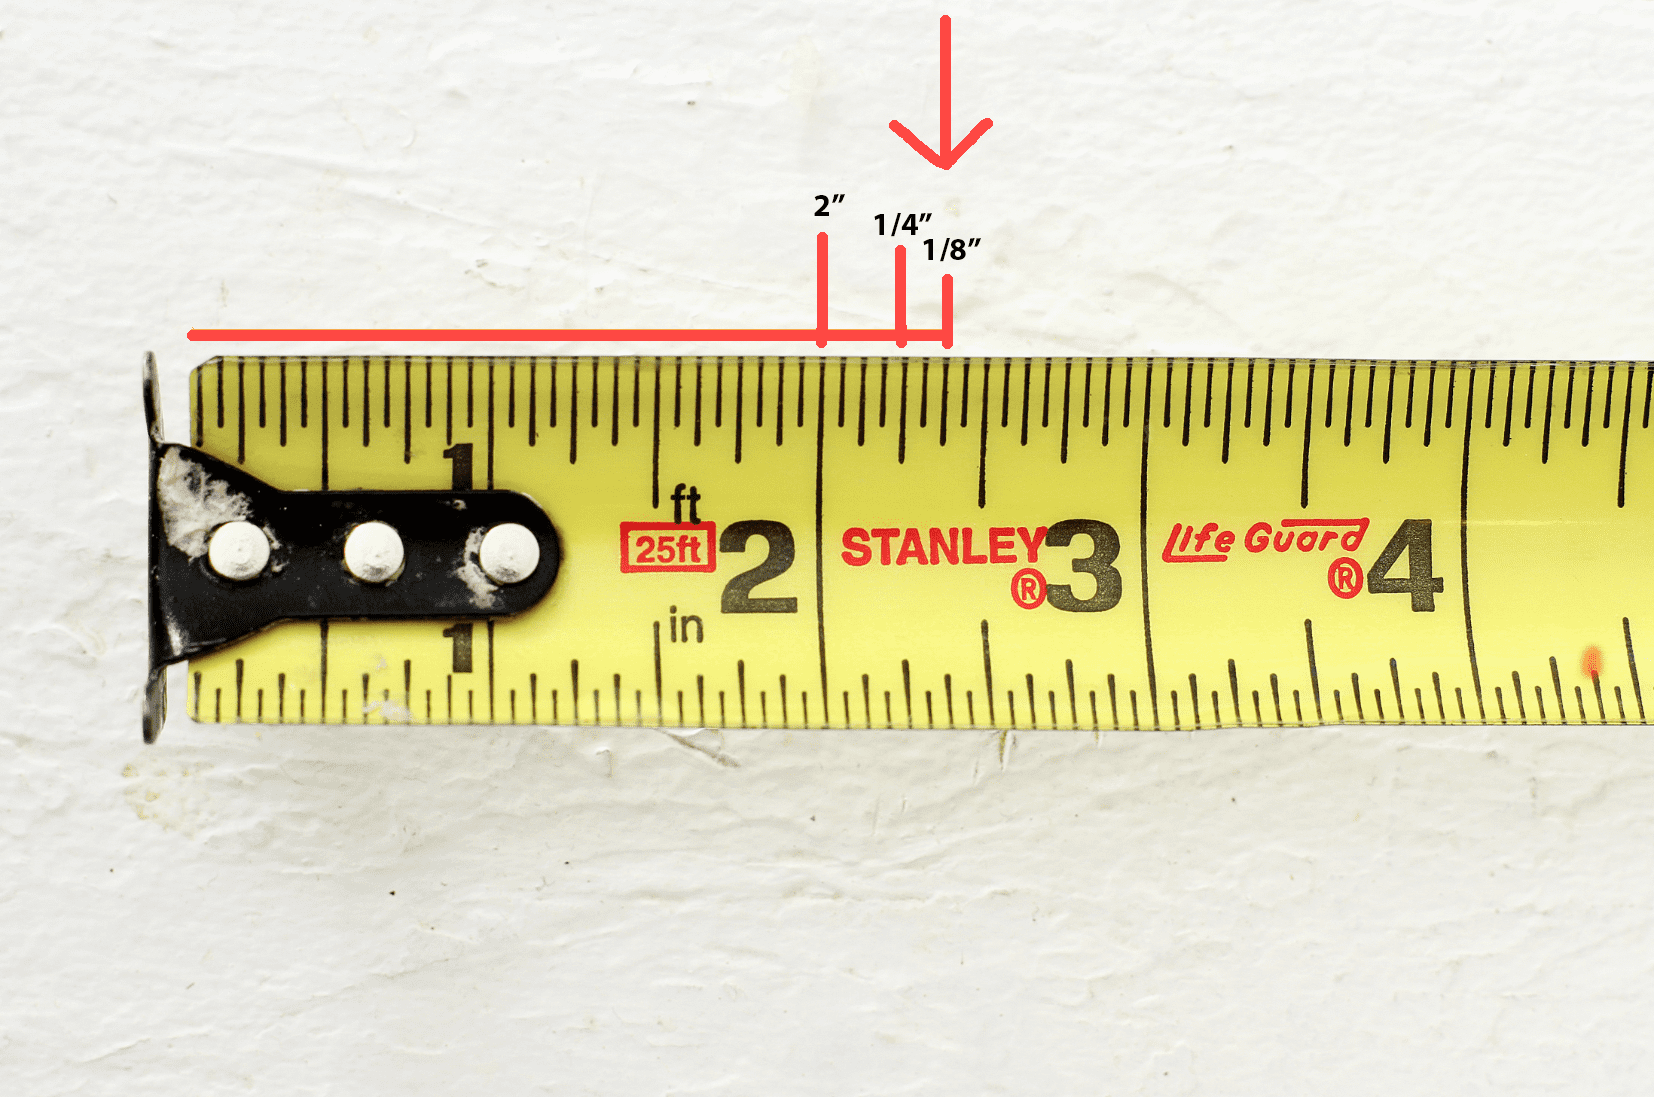 a tape measure